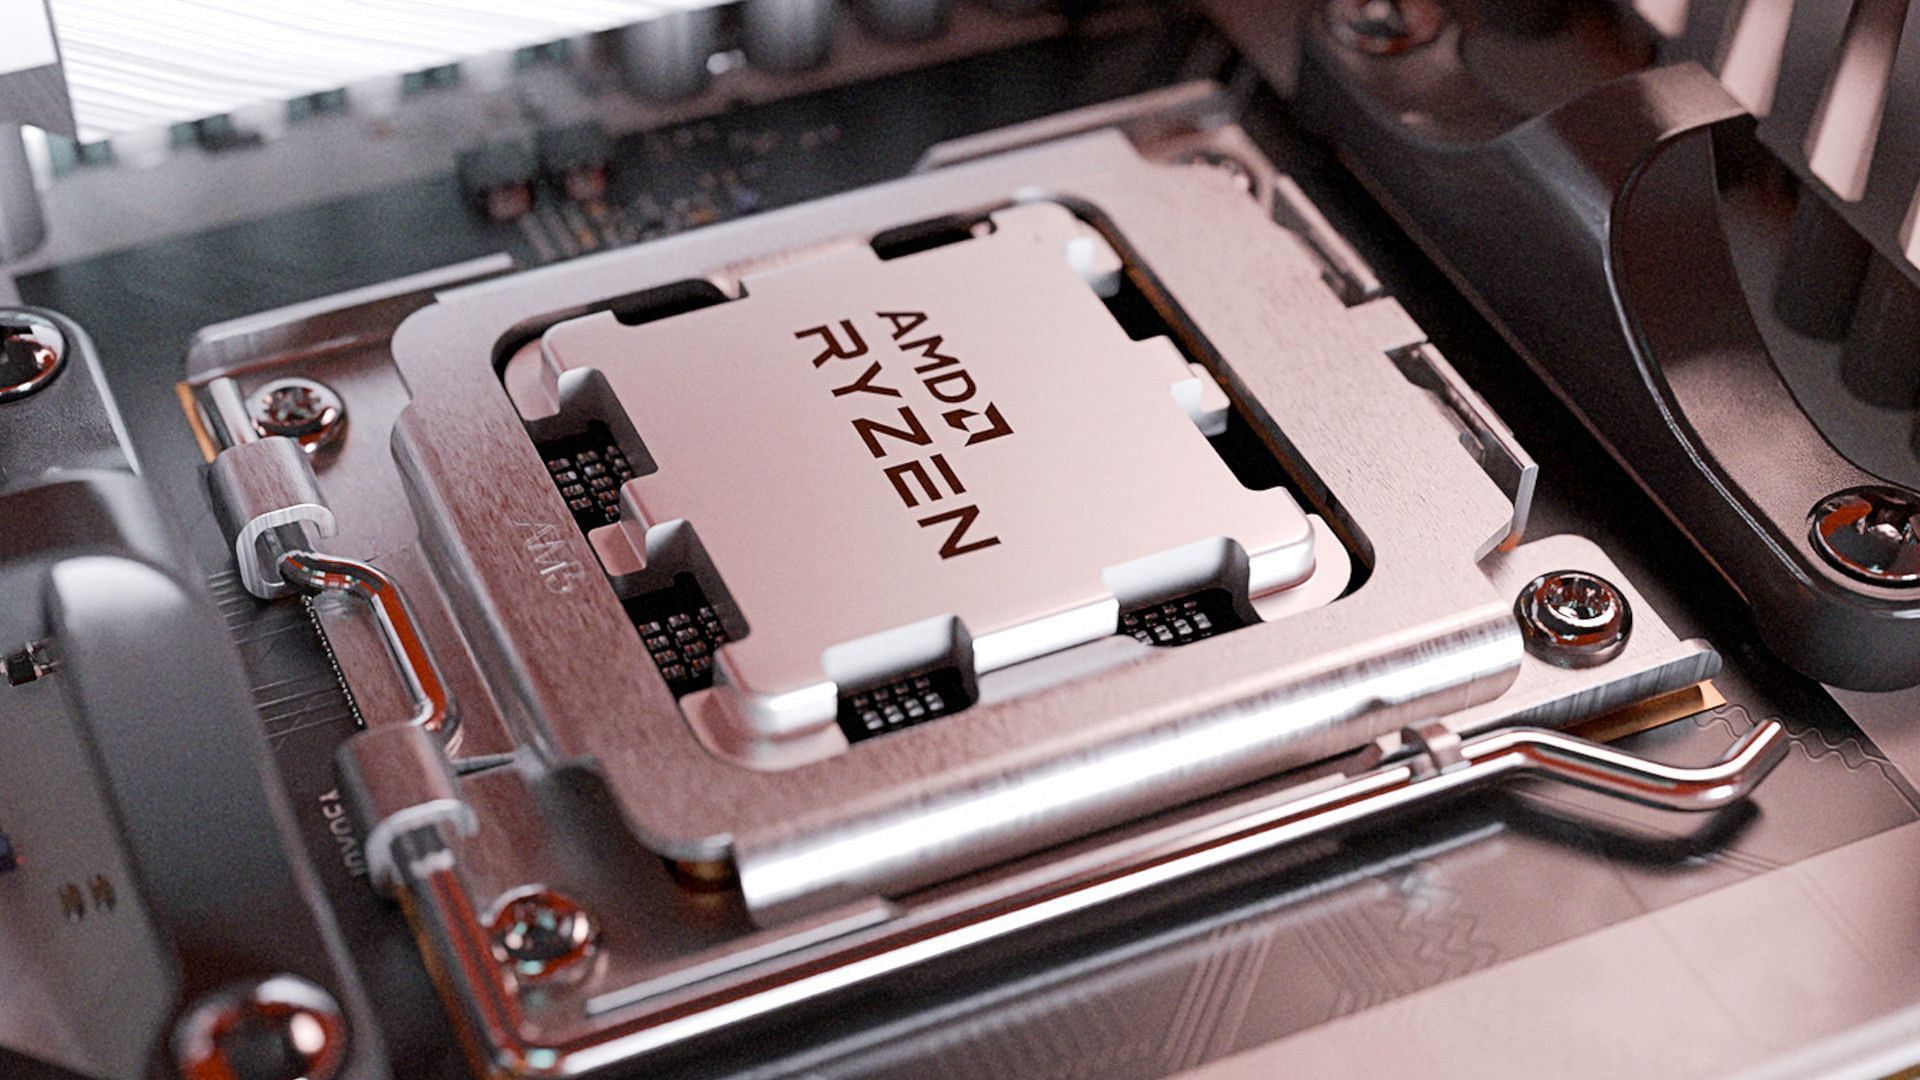 An AMD Ryzen 7000 chip (Image via AMD)